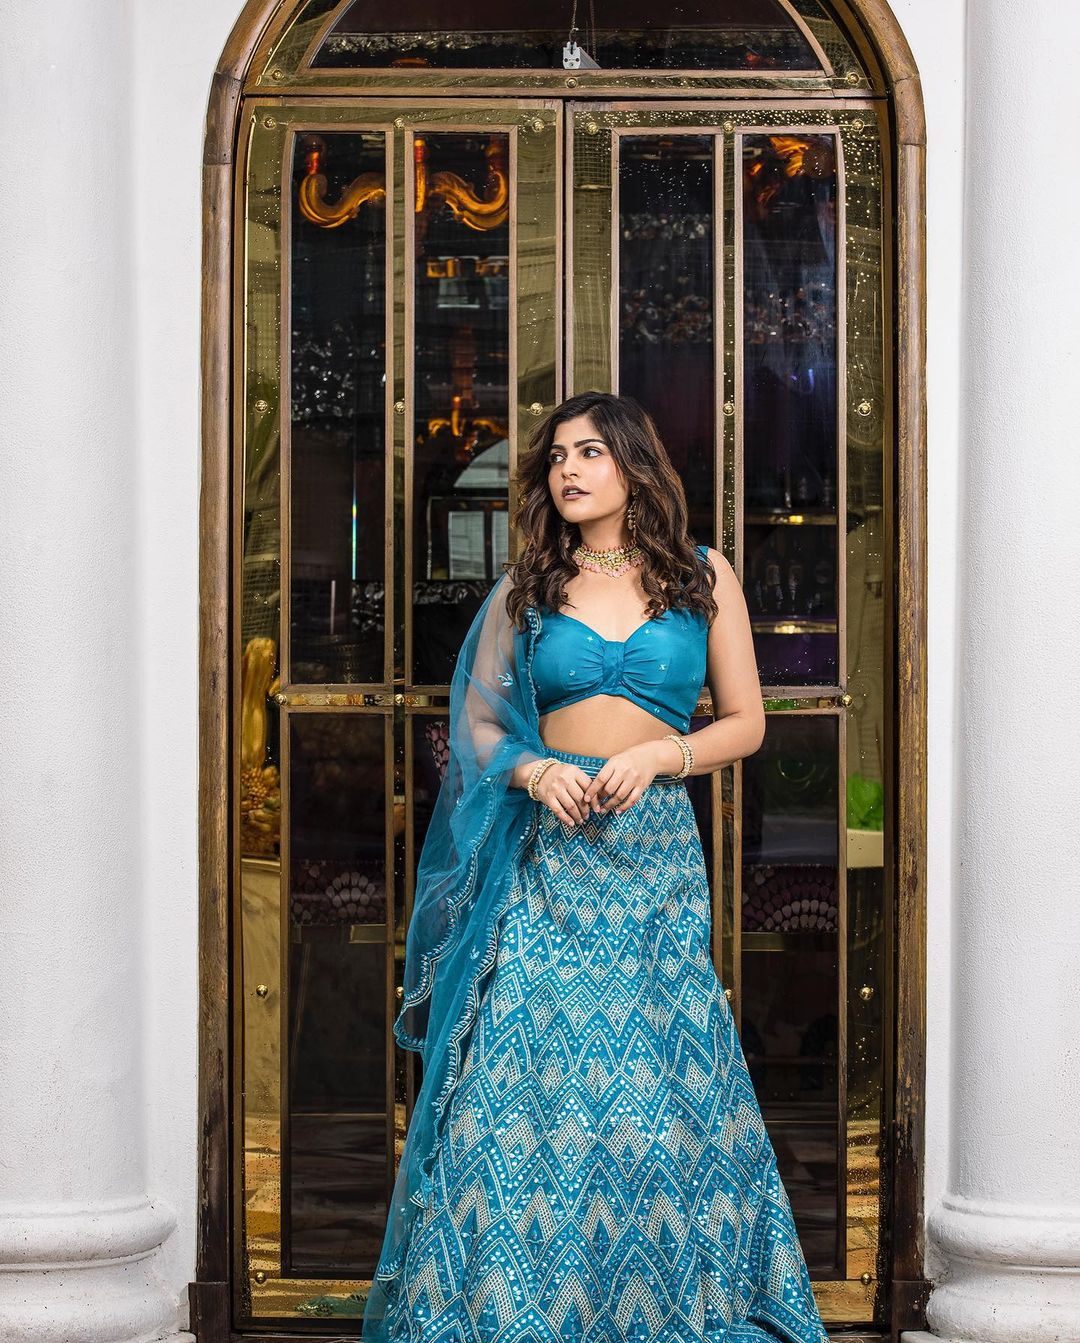 Kritika Khurana a Popular Female Fashion Influencer posing for Fab Look Magazine in Blue Bralette and Lehenga